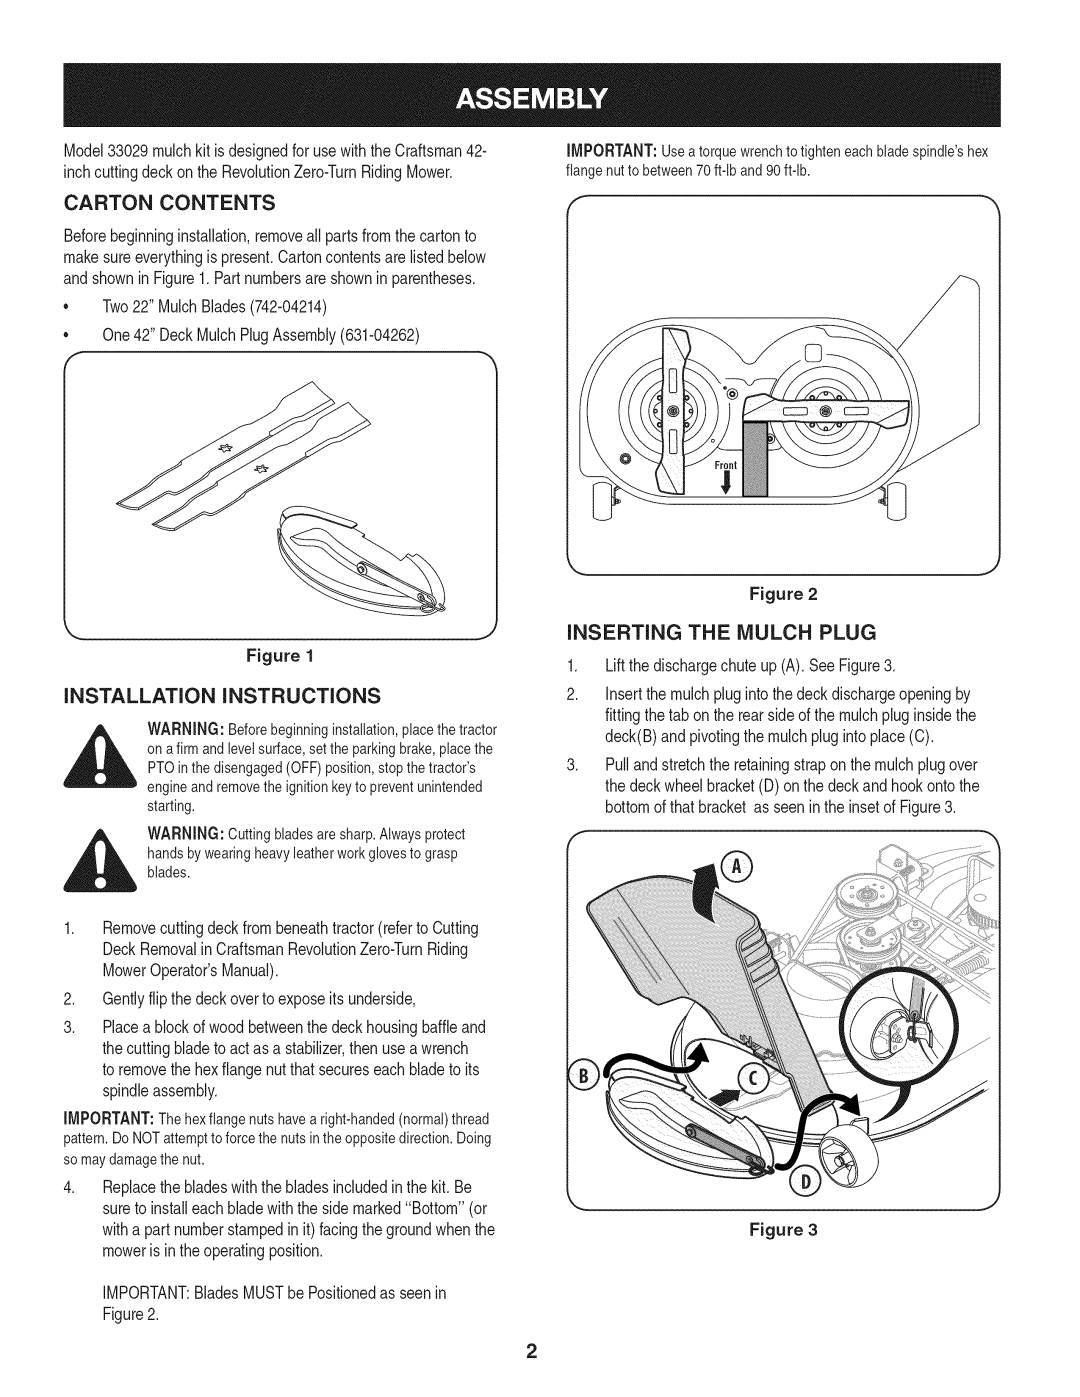 Craftsman 33029 manual Carton Contents, Installation Instructions, Inserting The Mulch Plug, Figure 